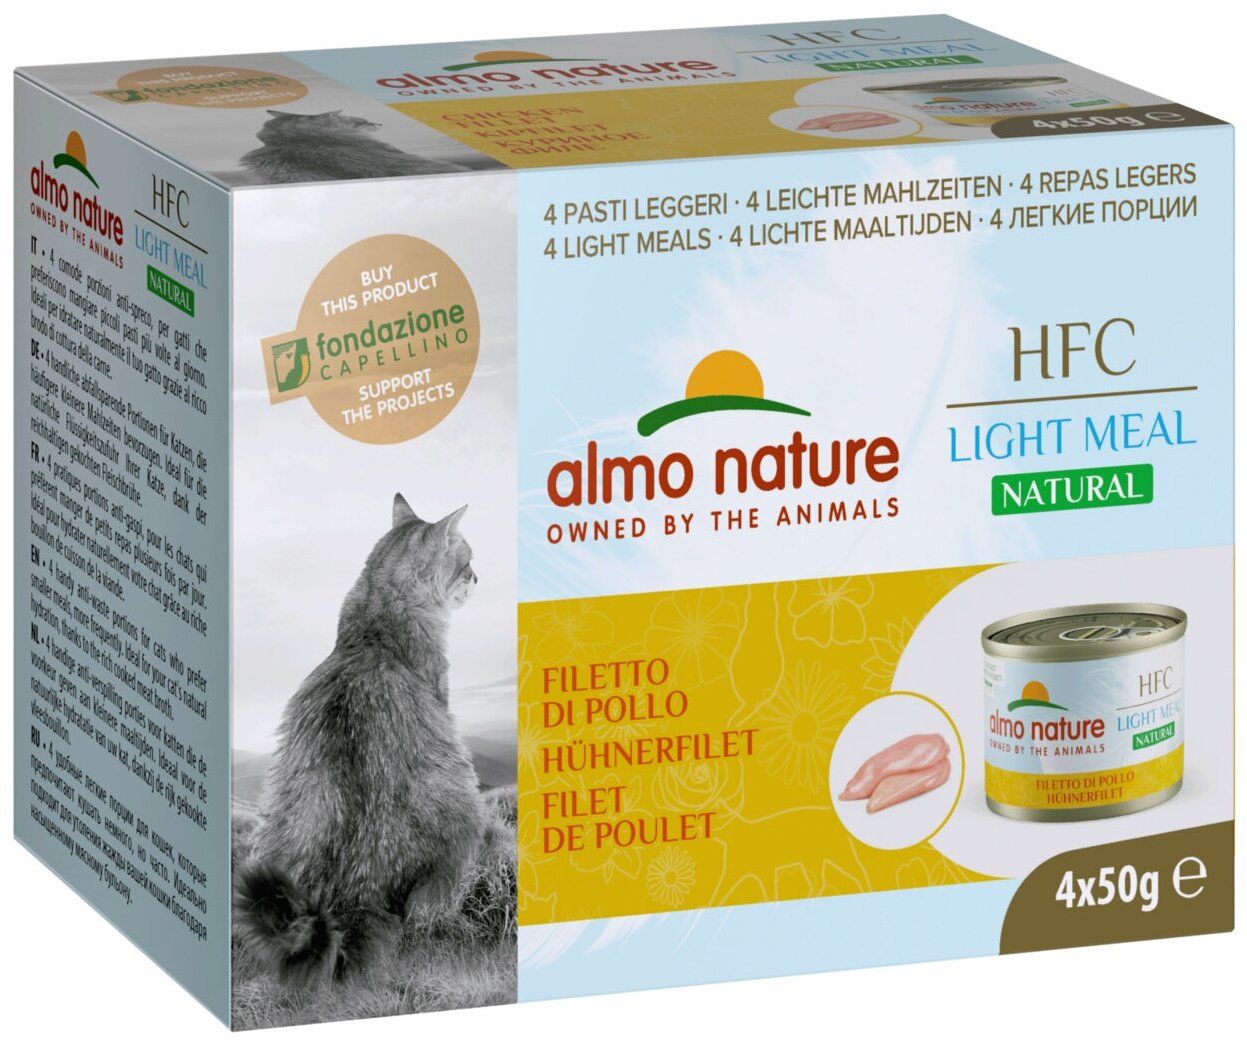 ALMO NATURE HFC NATURAL LIGHT MEAL набор банок для взрослых кошек с куриным филе 4 шт х 50 гр (1 шт)